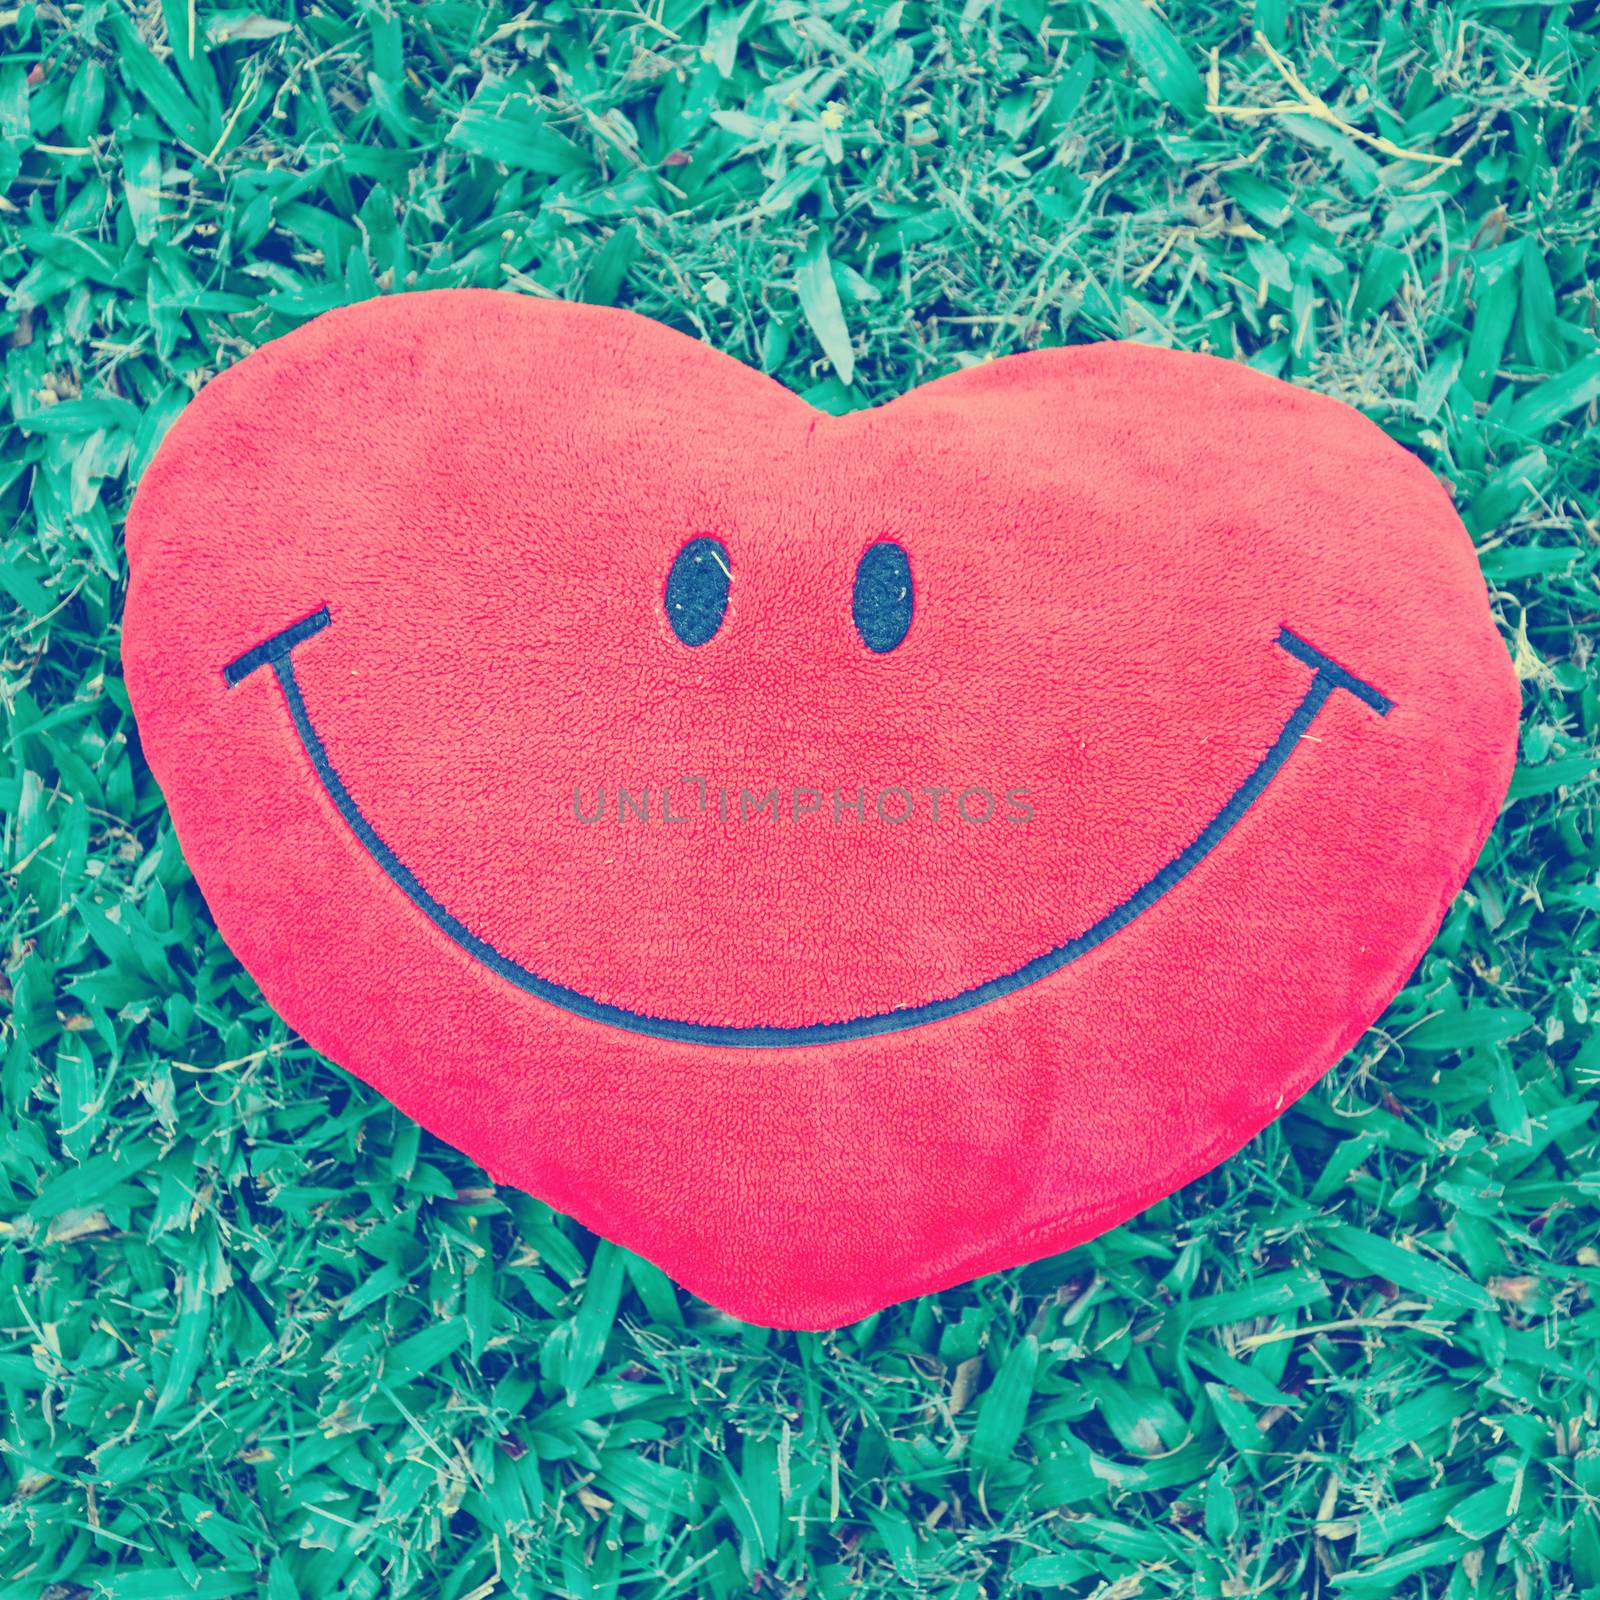 Big love heart shape pillow on green grass by jakgree